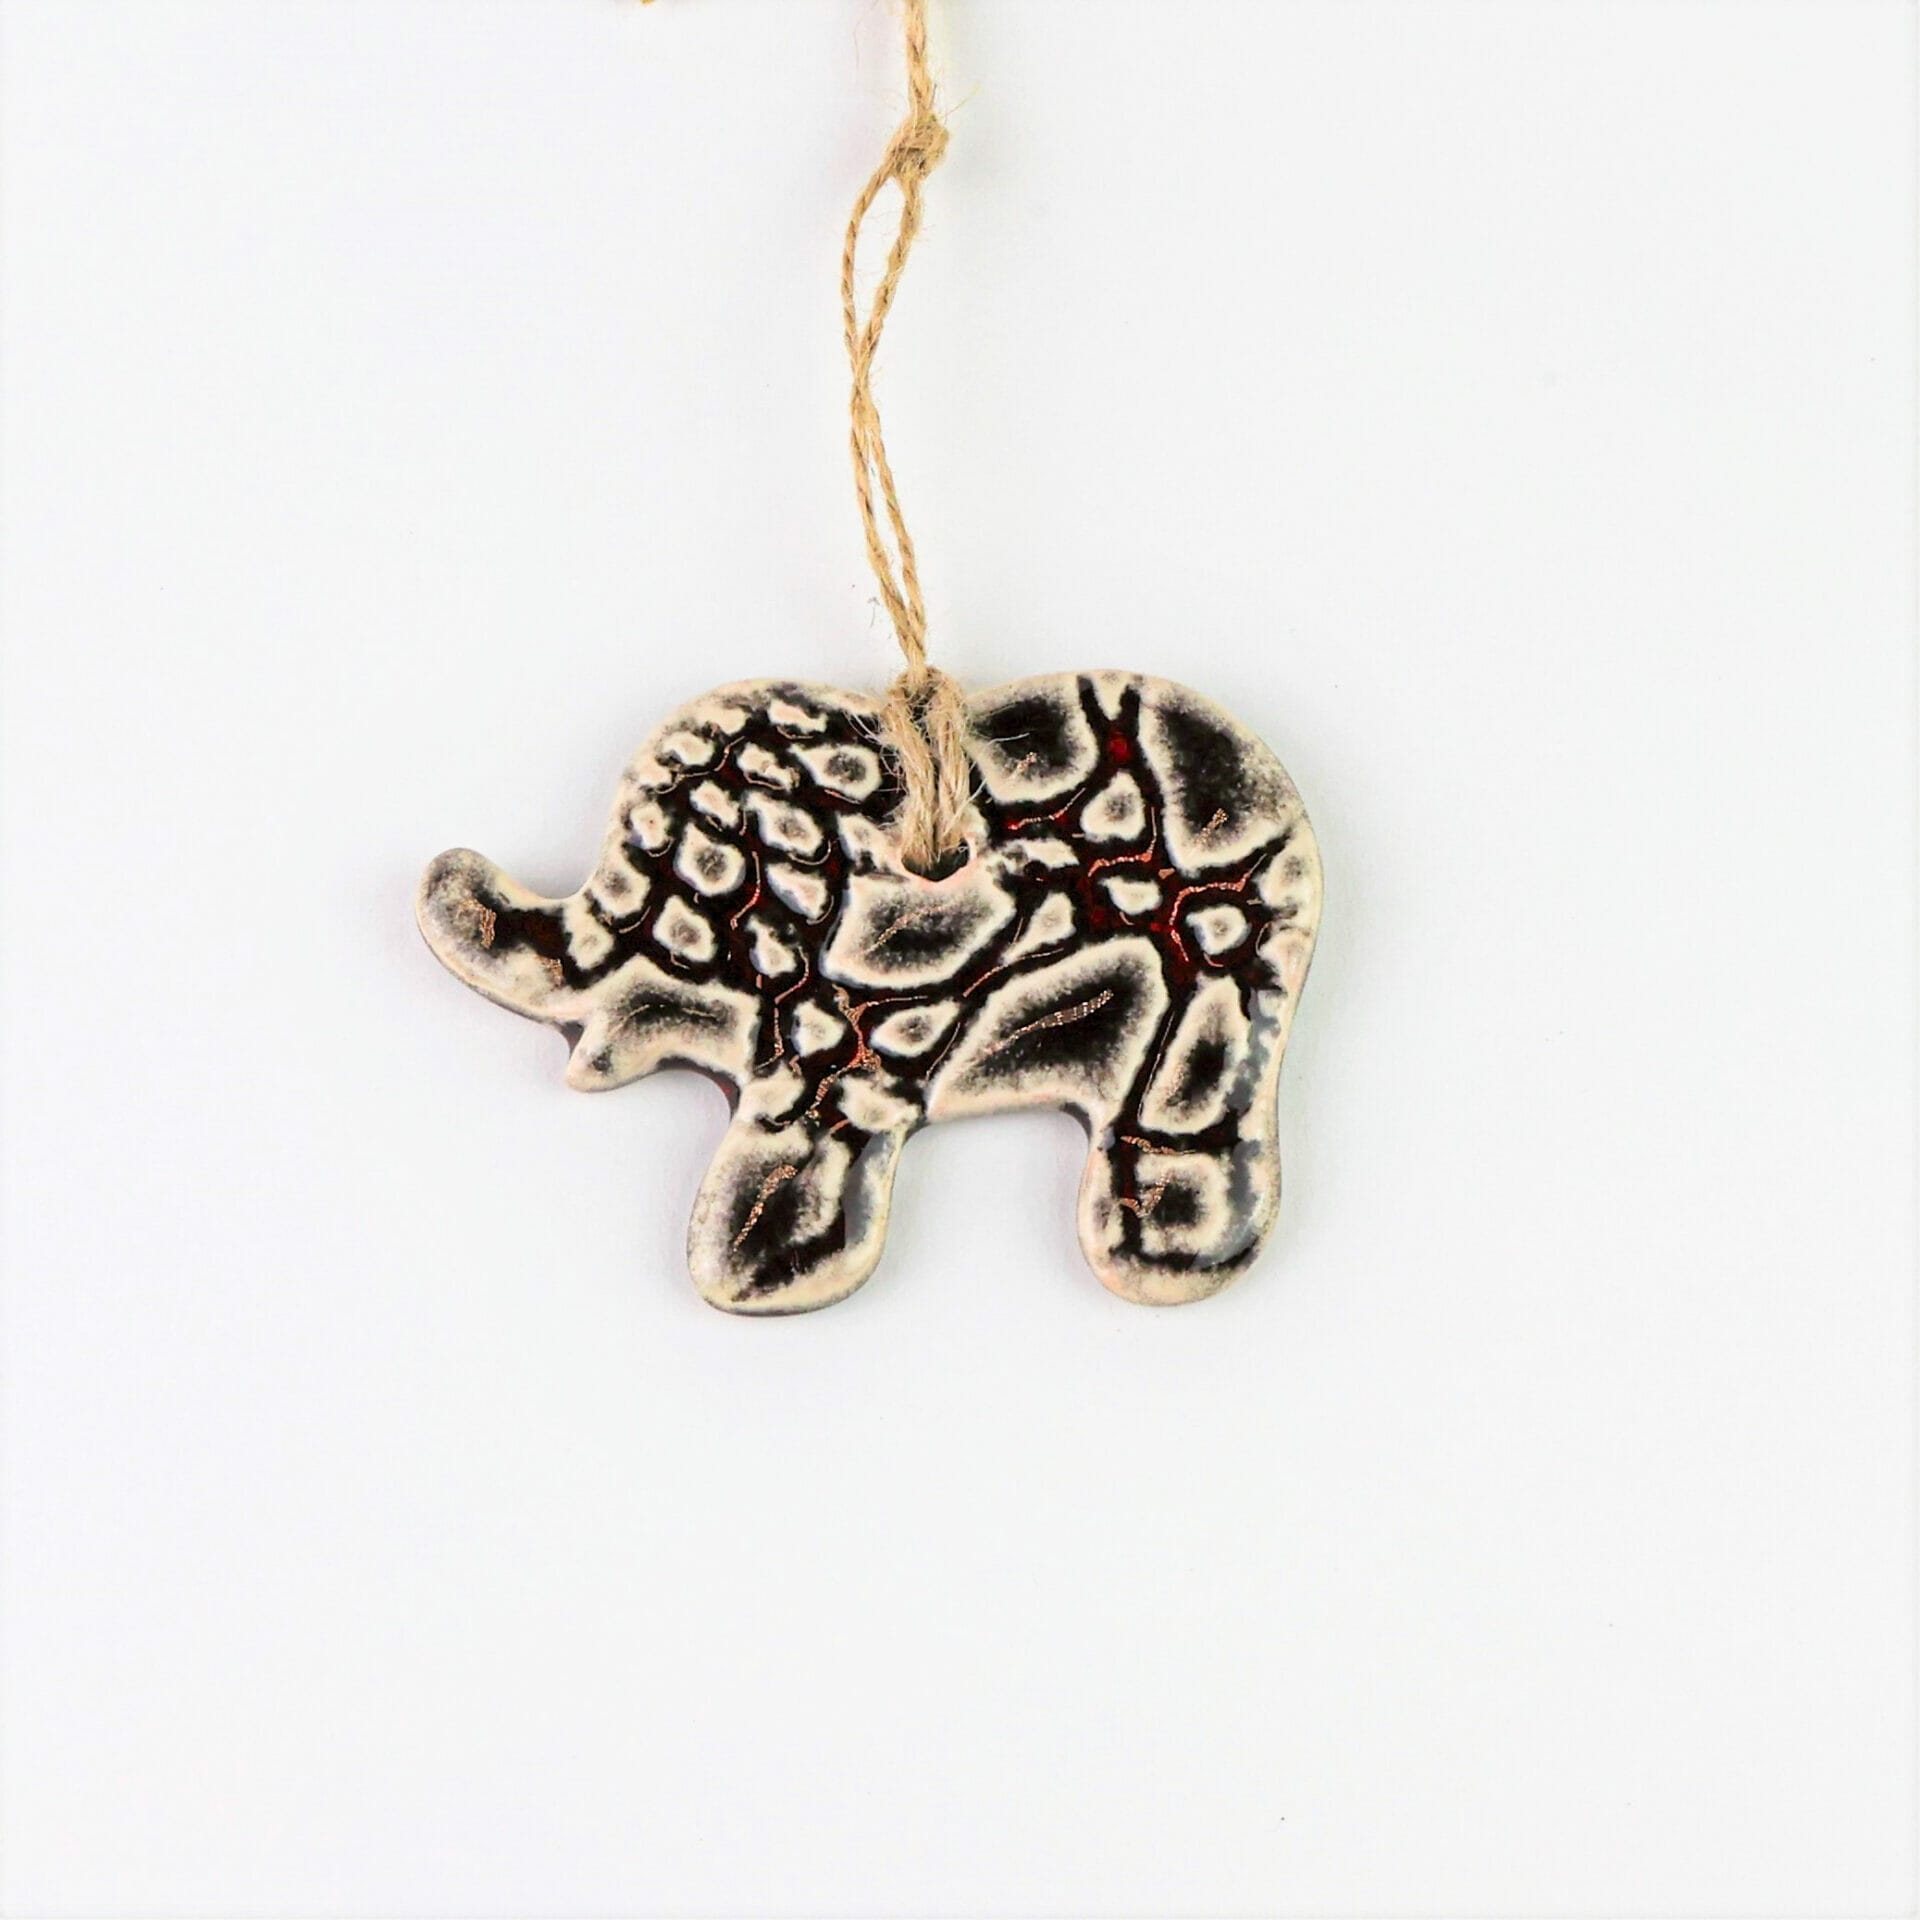 Custom ornament in the shape of an elephant